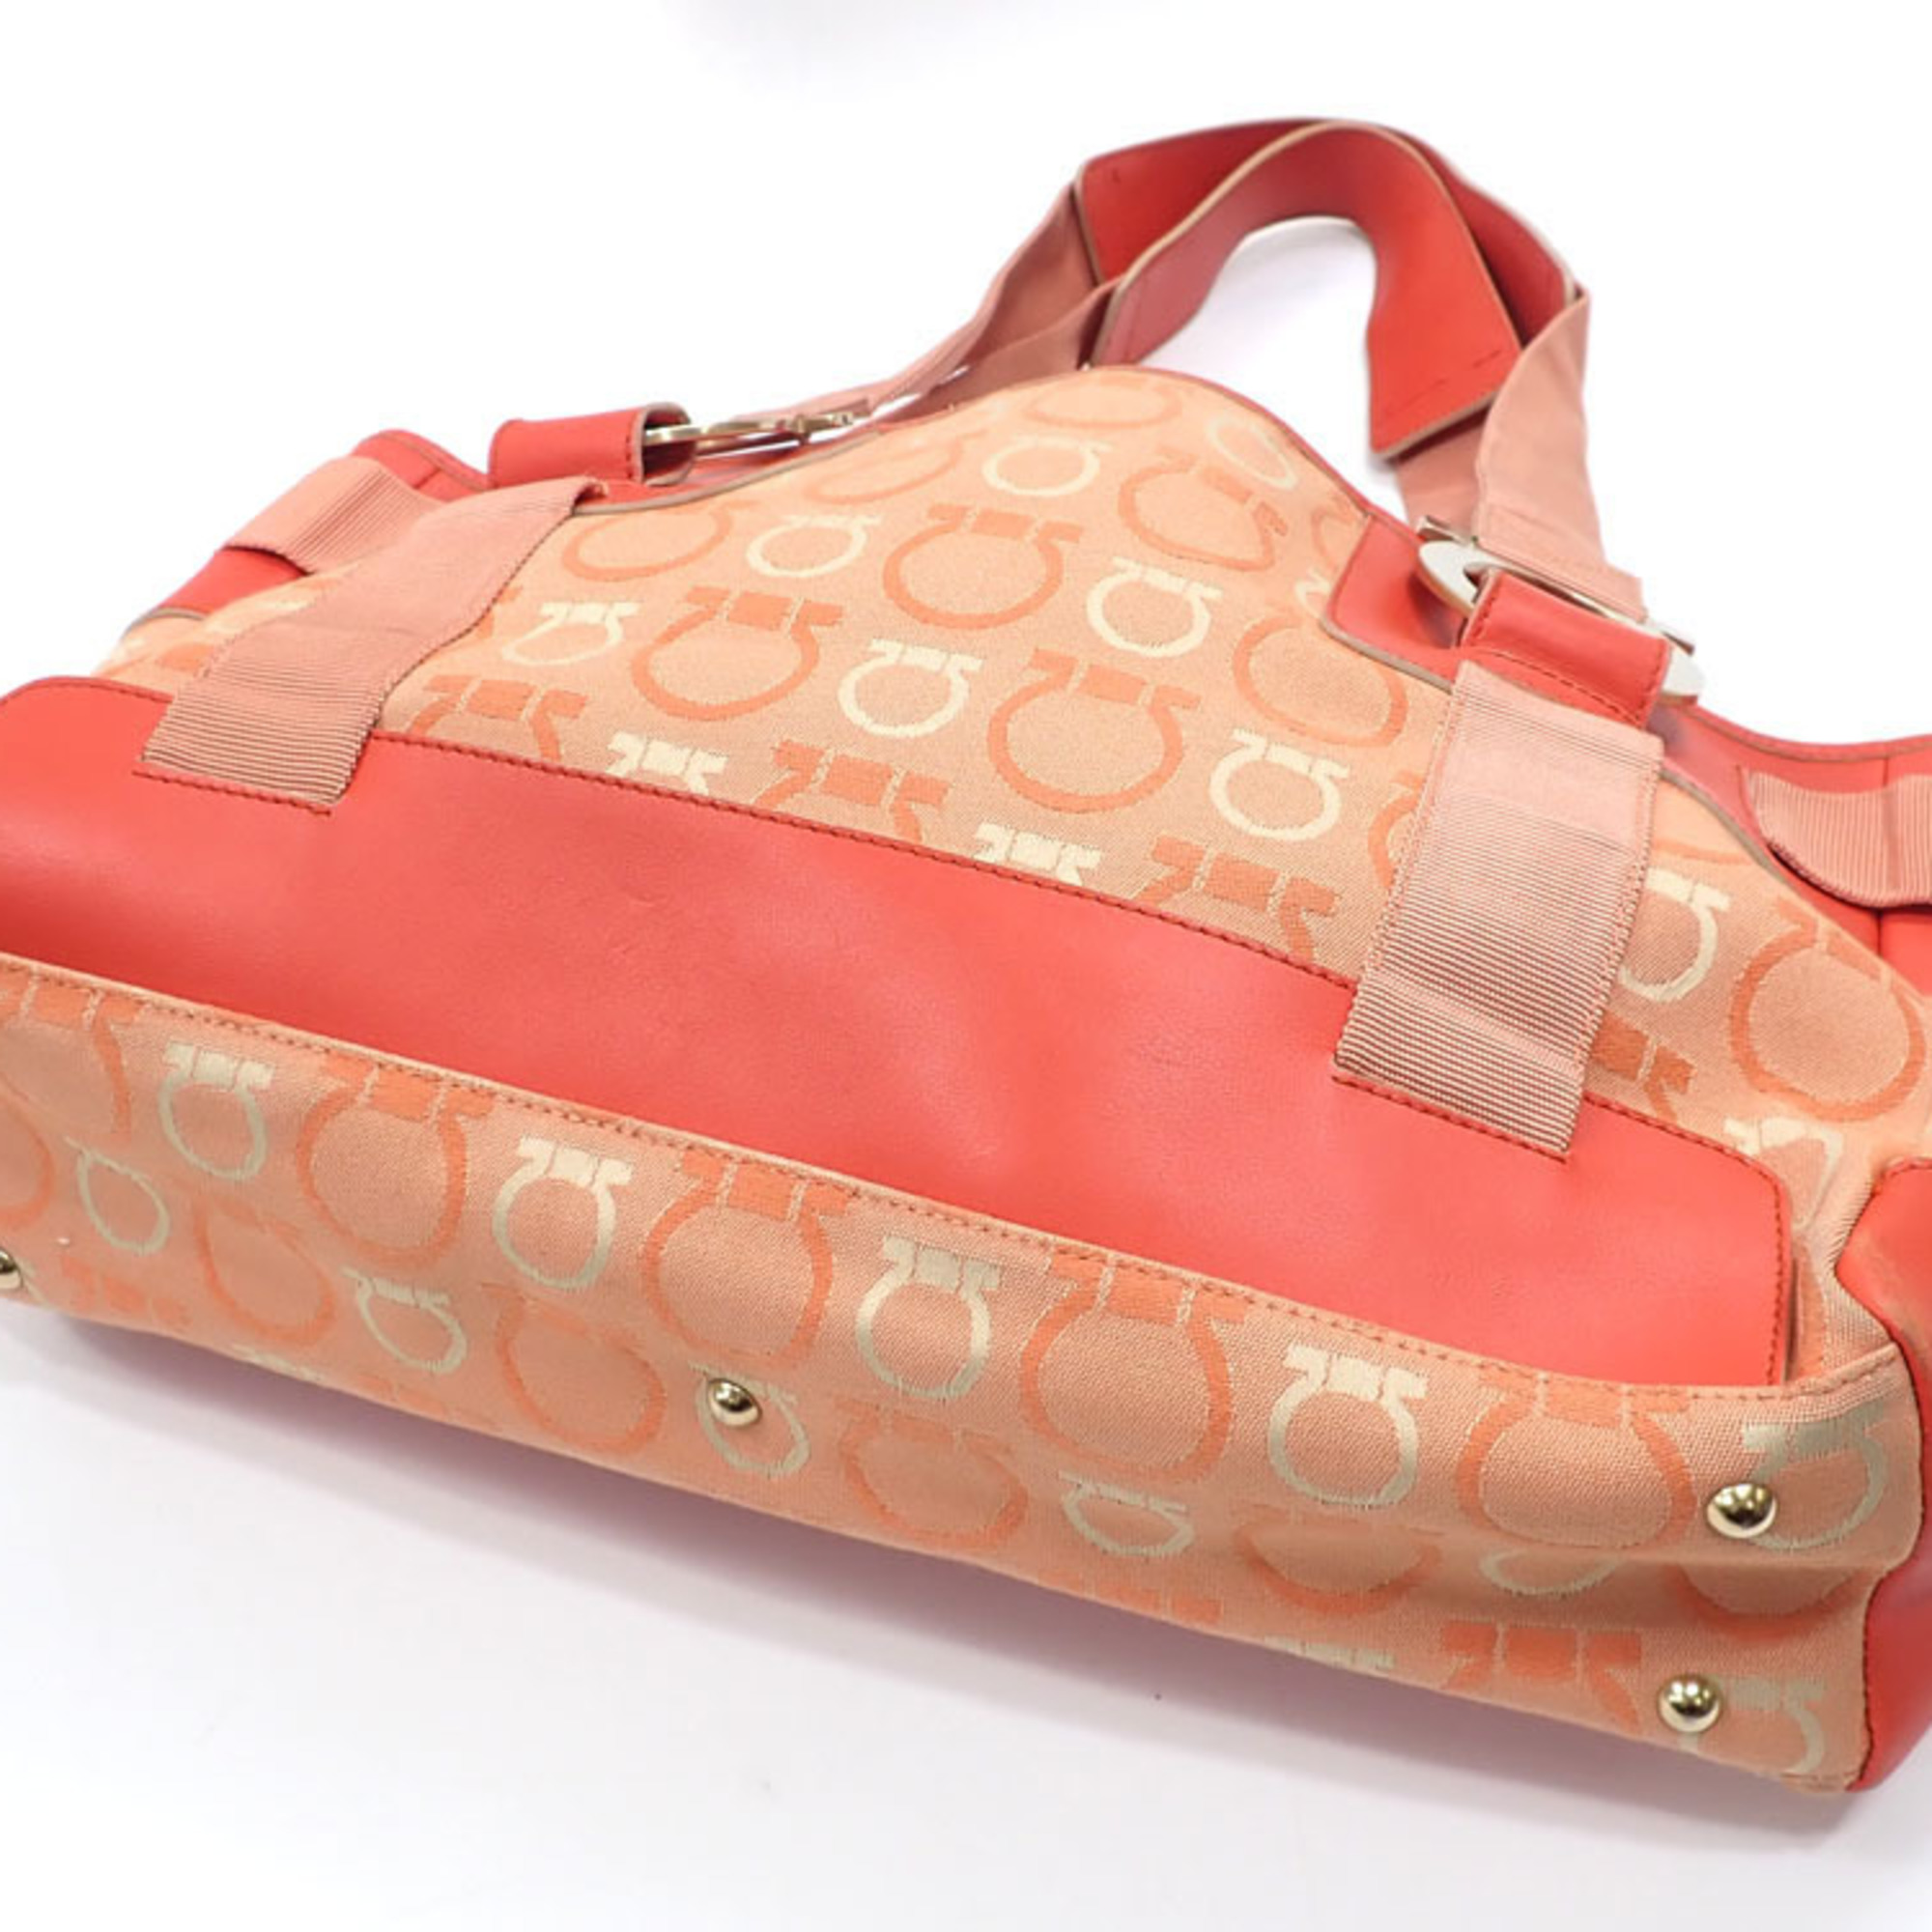 Salvatore Ferragamore Tote Bag for Women Orange Canvas Leather Q215375 Hand Shoulder A2231017